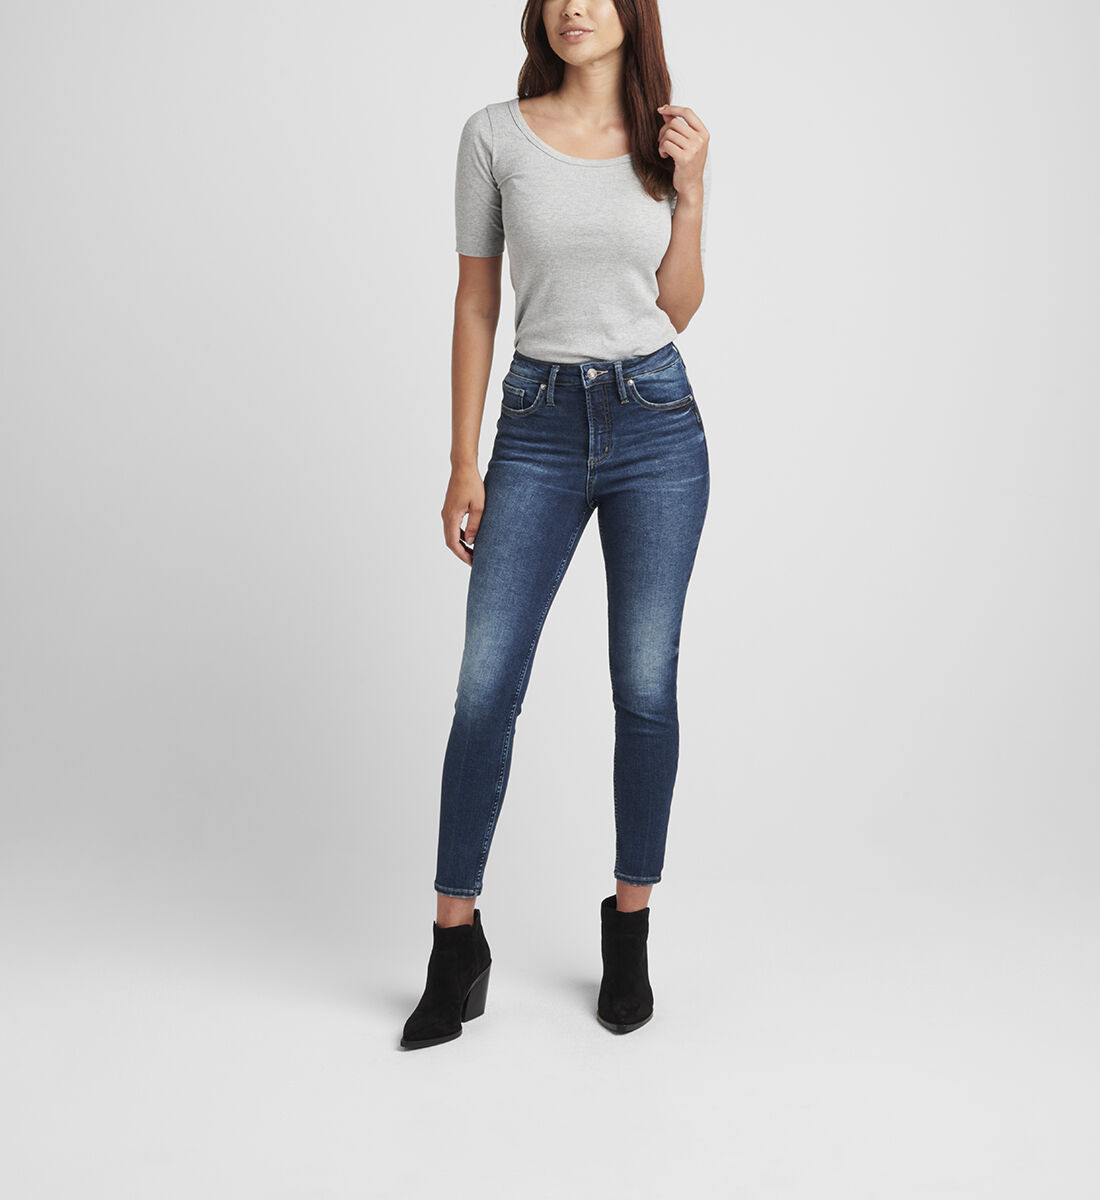 Infinite Fit High Rise Skinny Jeans Alt Image 1